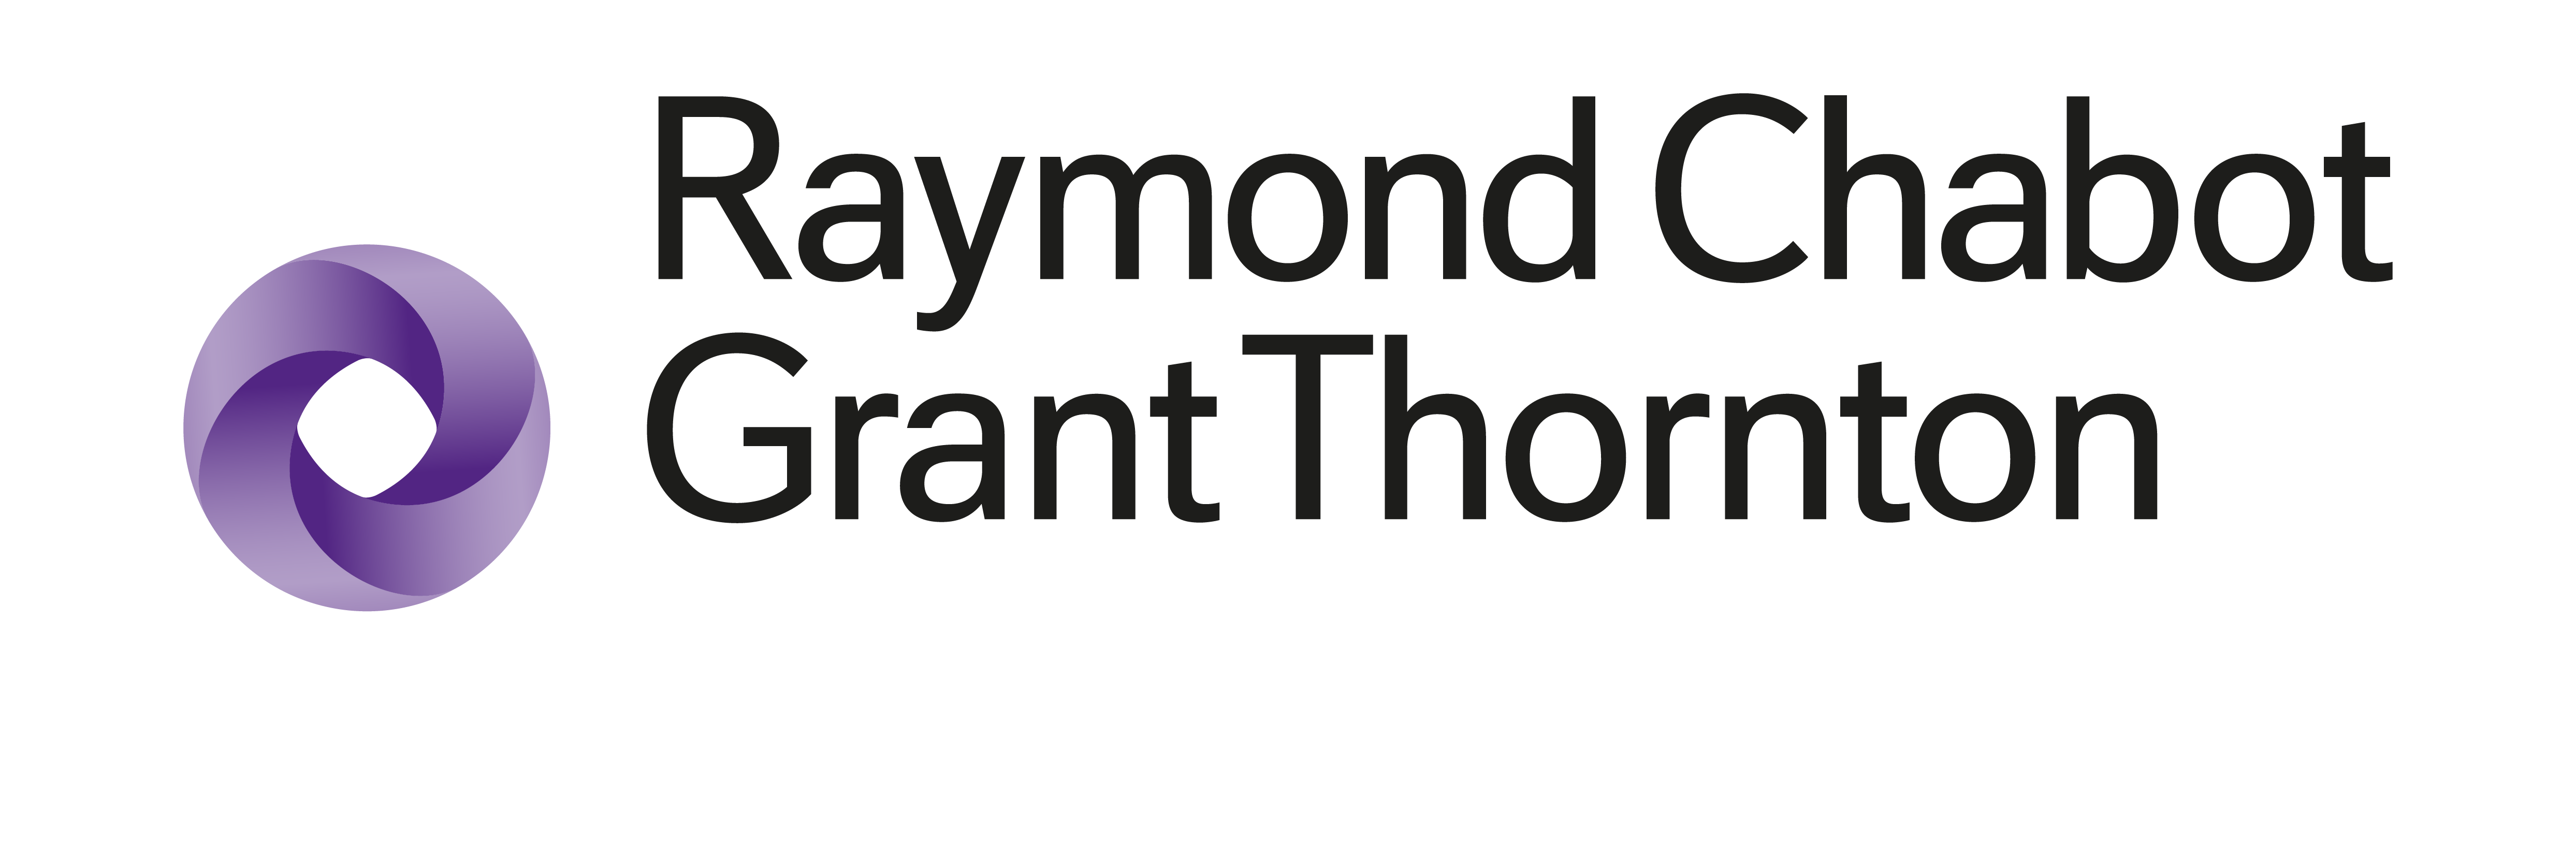 Raymond Chabot Grant Thornton - Partenaire majeur de Magog Technopole